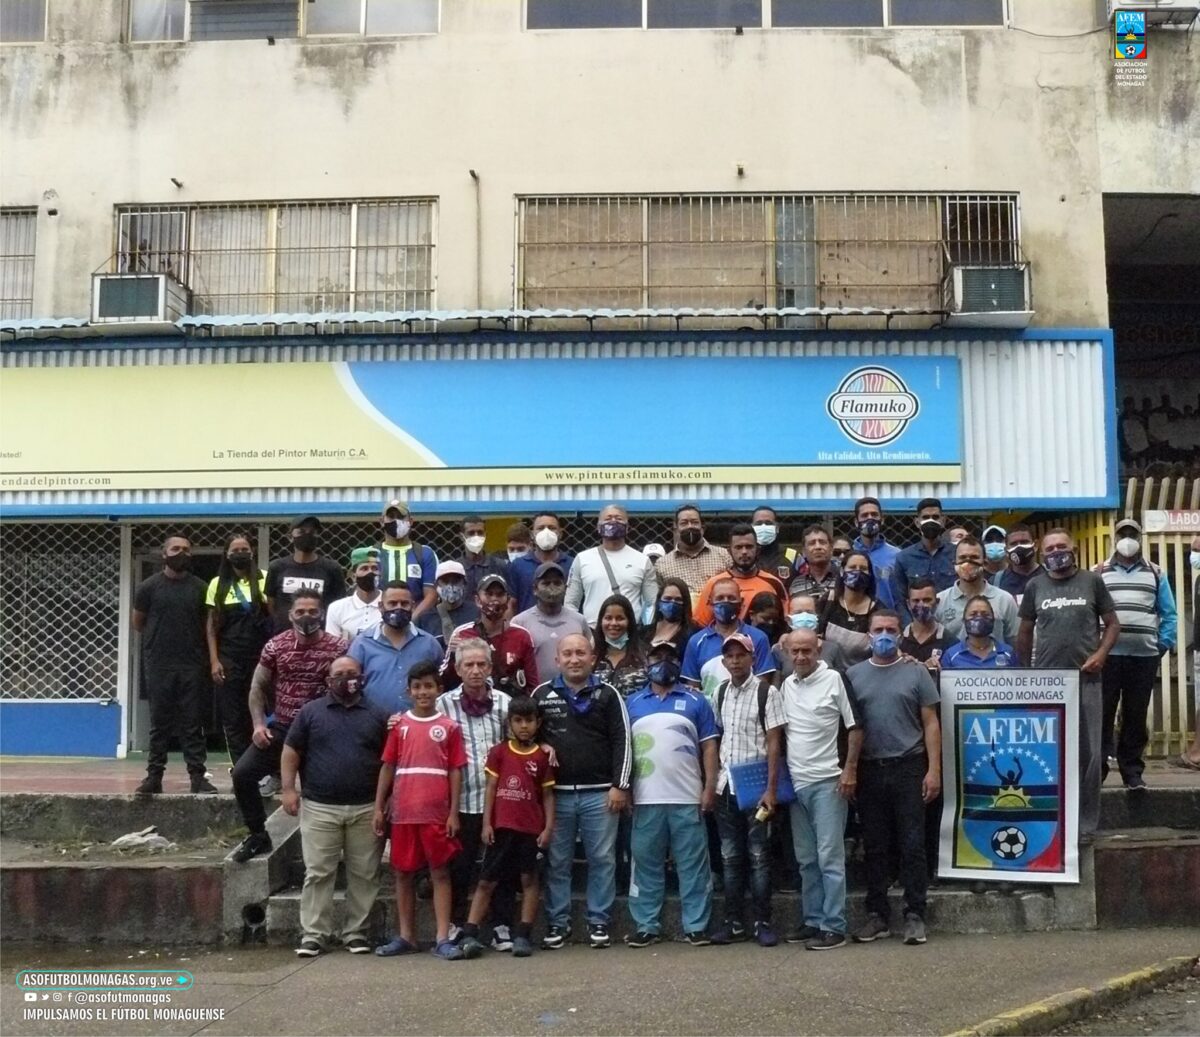 futbol monaguense celebra primer aniversario de su sede propia laverdaddemonagas.com 239615037 1694113797450673 3957047563128309646 n